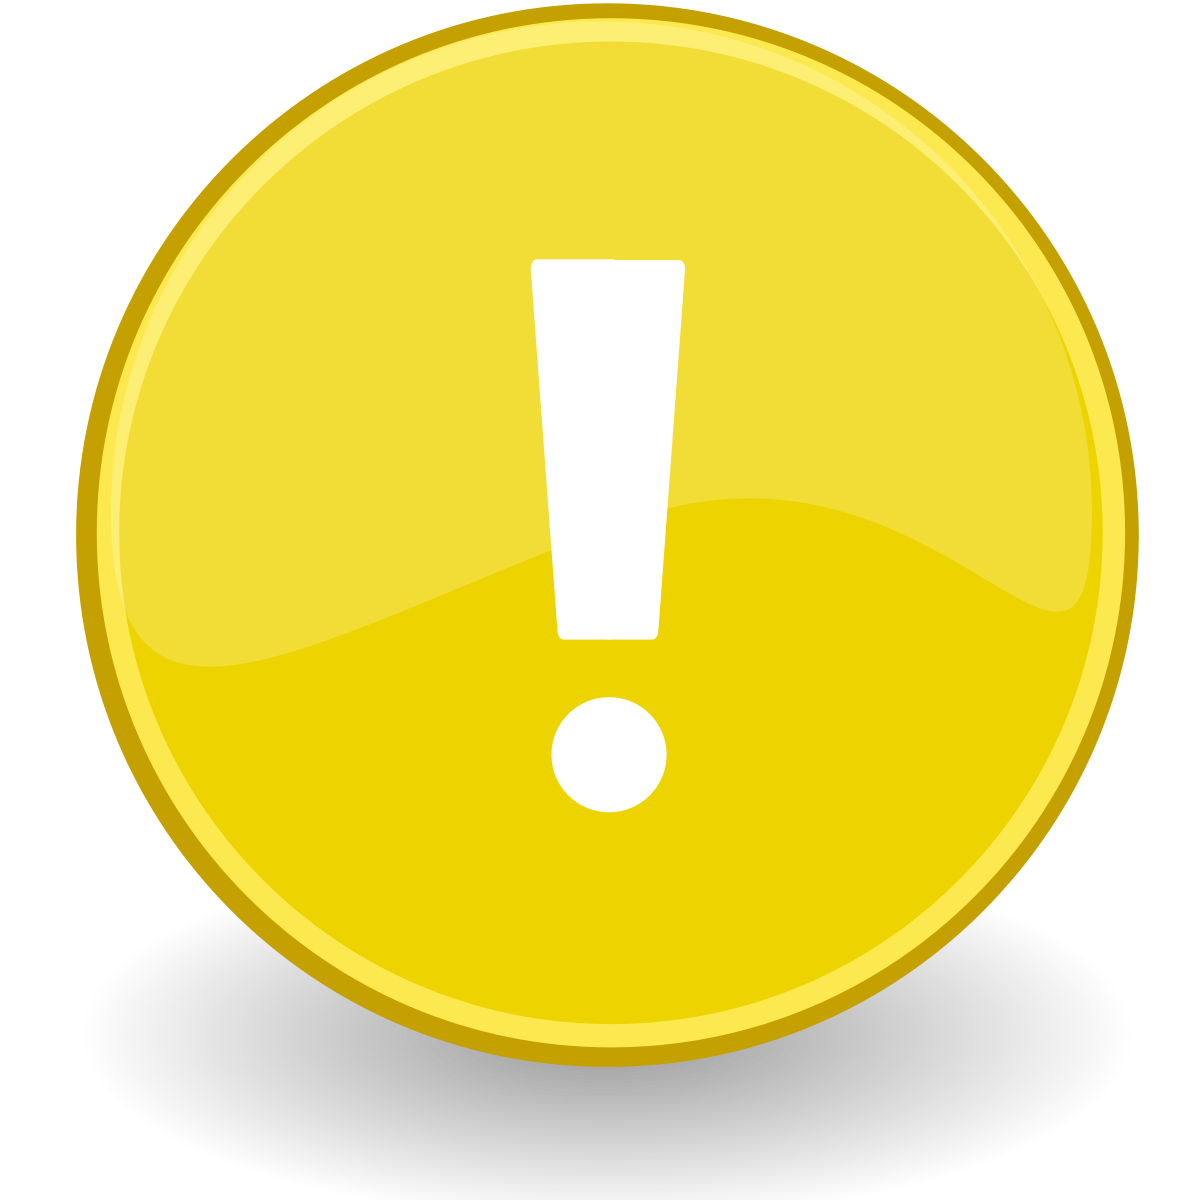 Файл:Emblem-important-yellow.svg — Википедия.